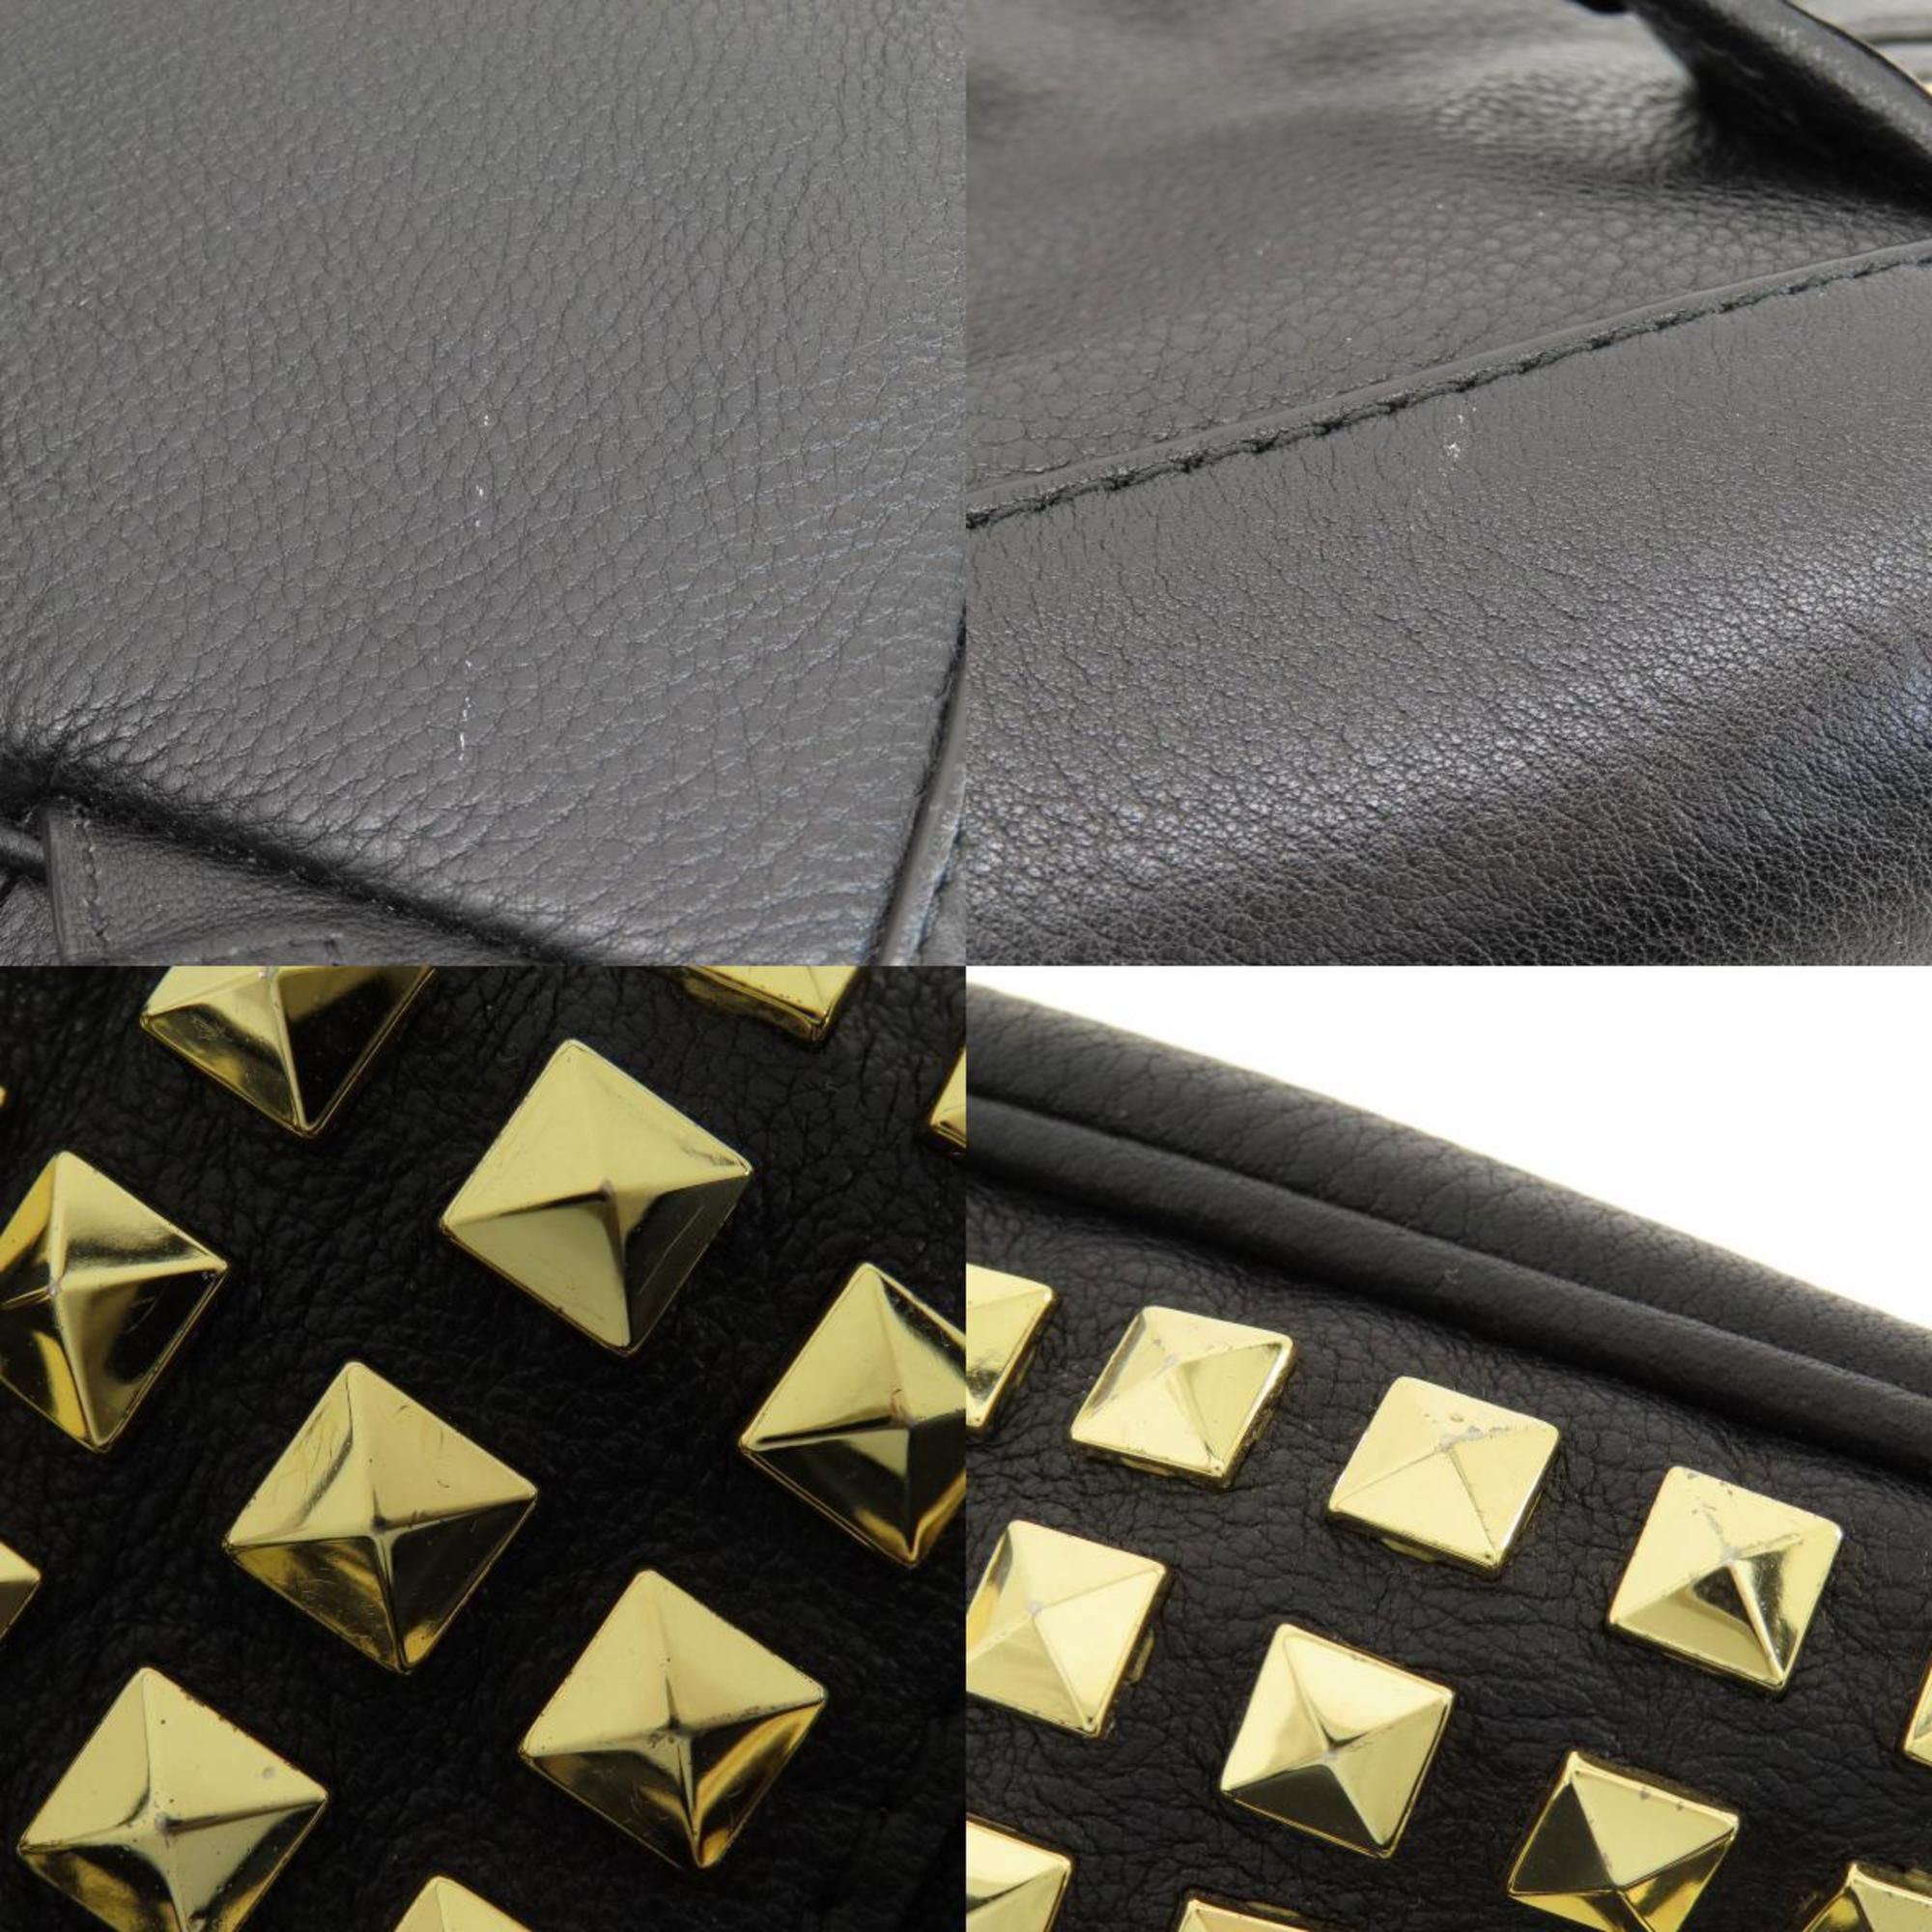 Michael Kors Studded Backpack/Daypack Leather Women's